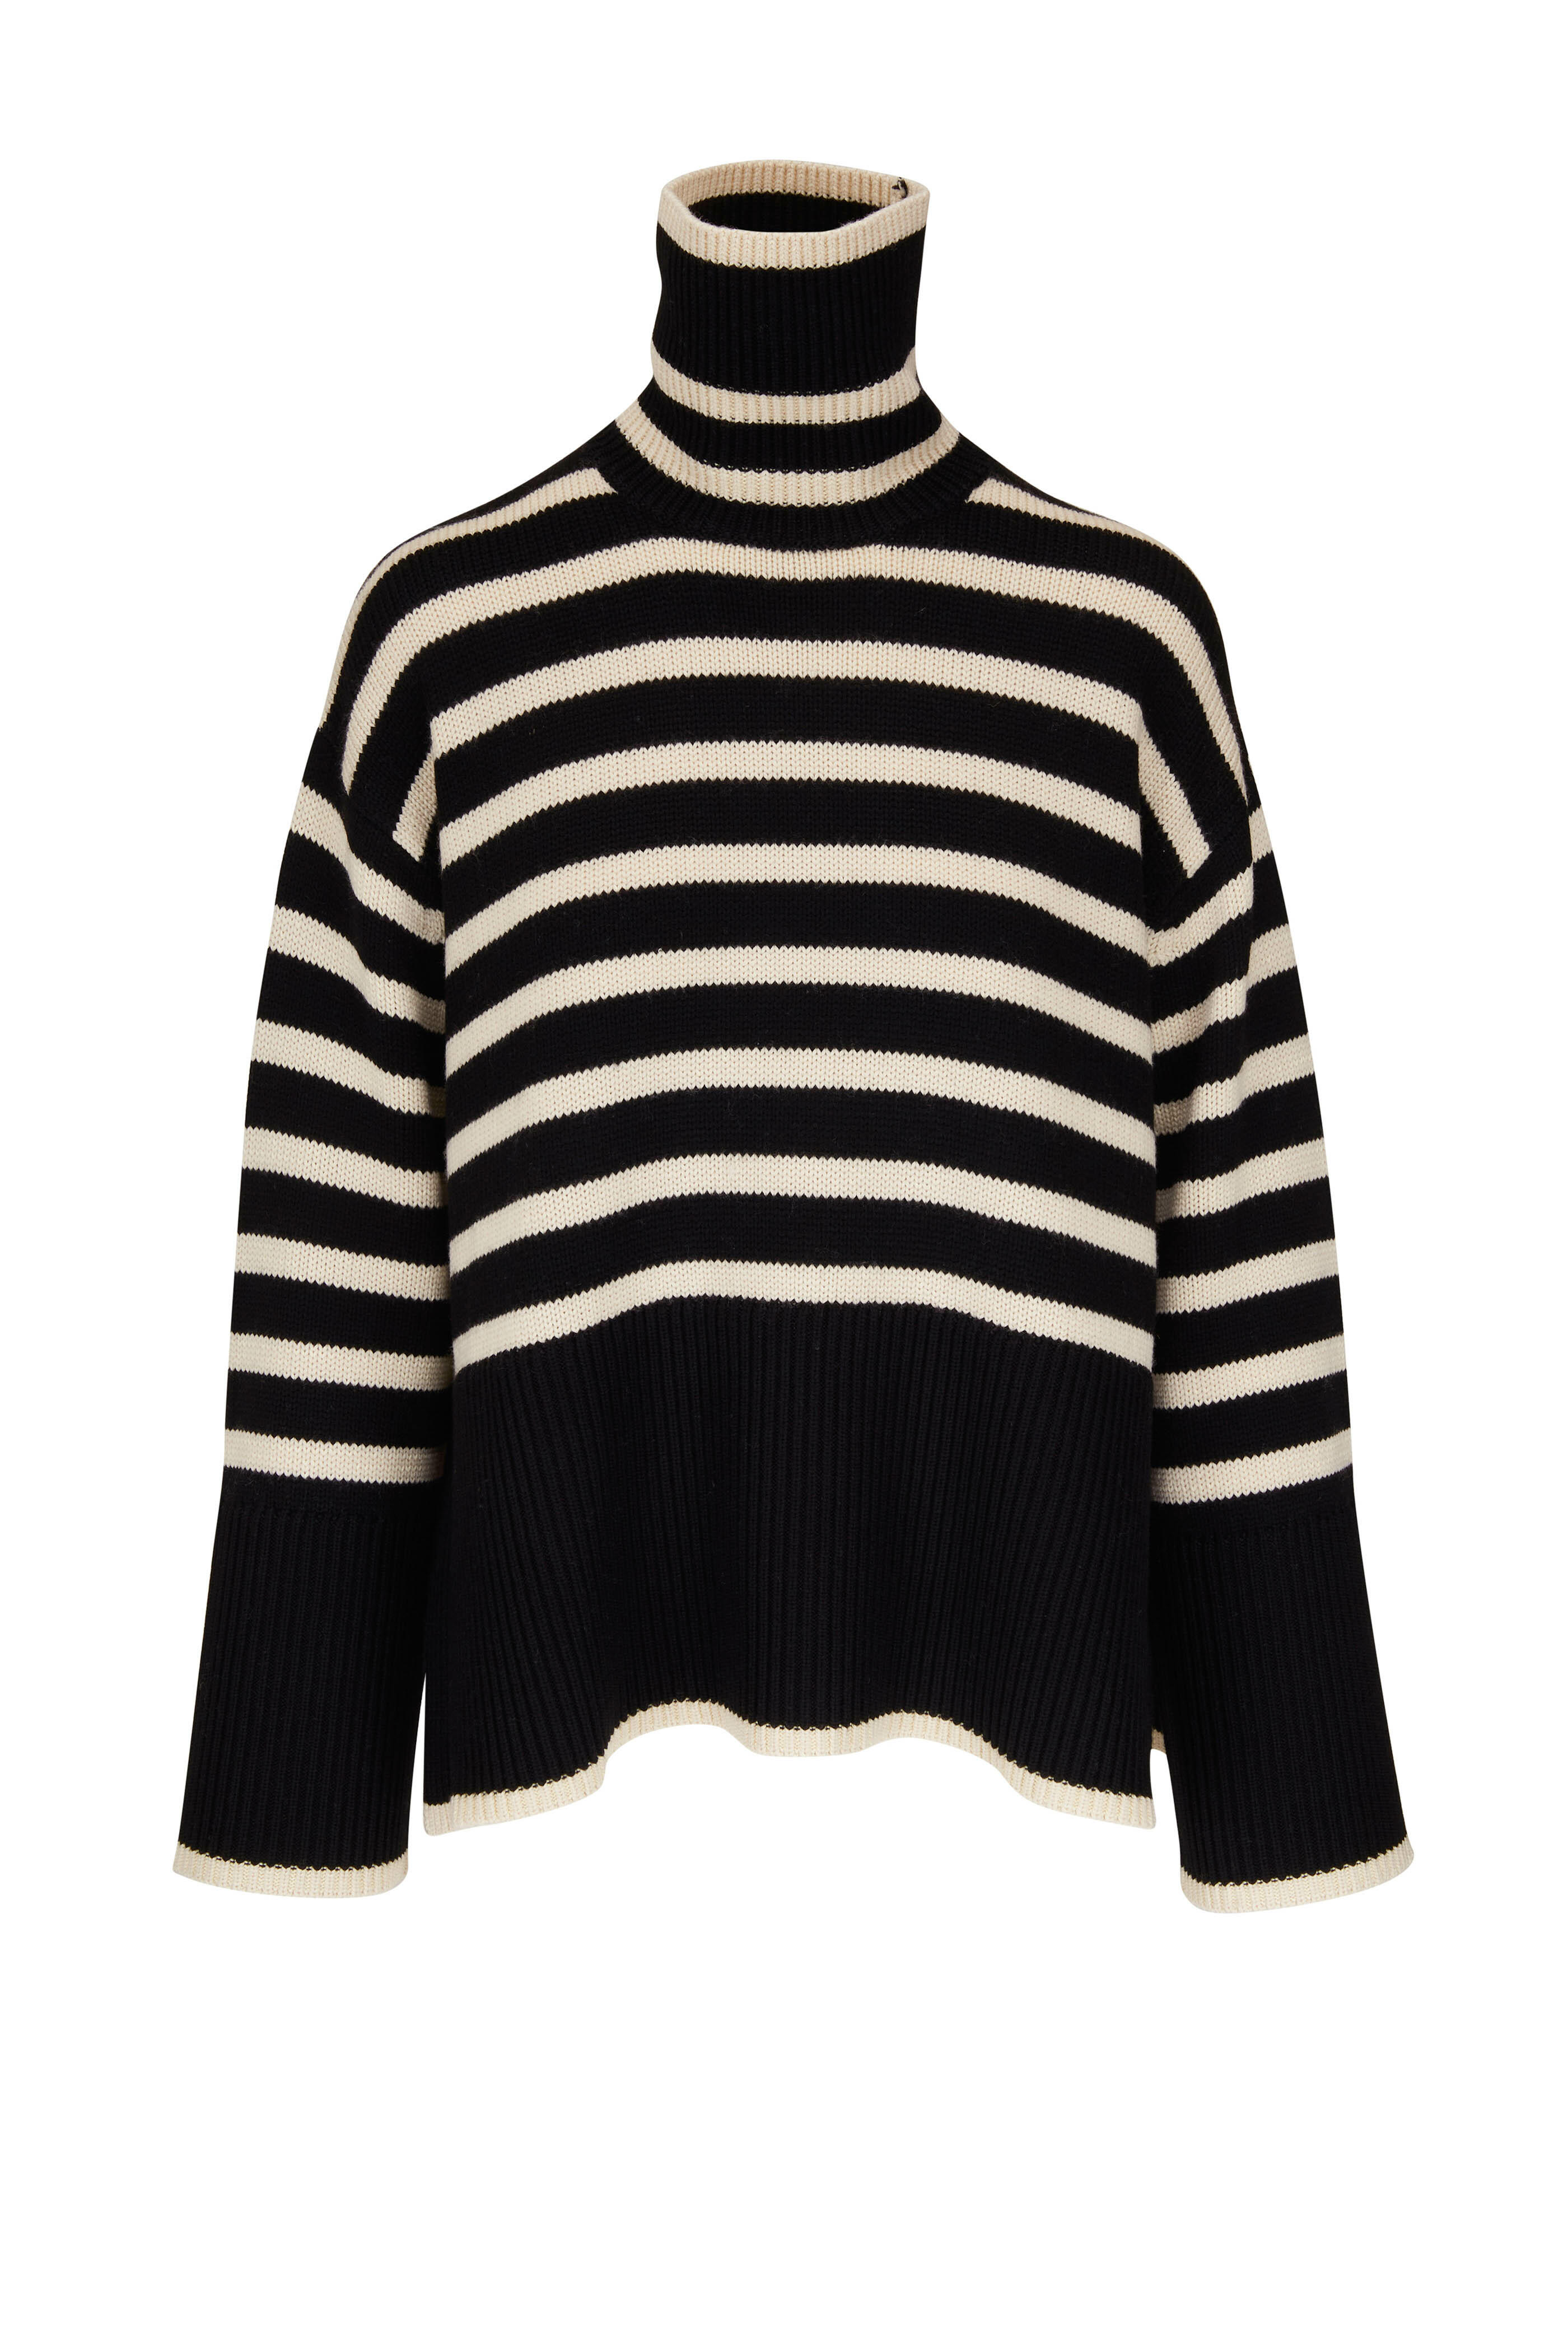 Totême - Signature Stripe Black & White Turtleneck Sweater